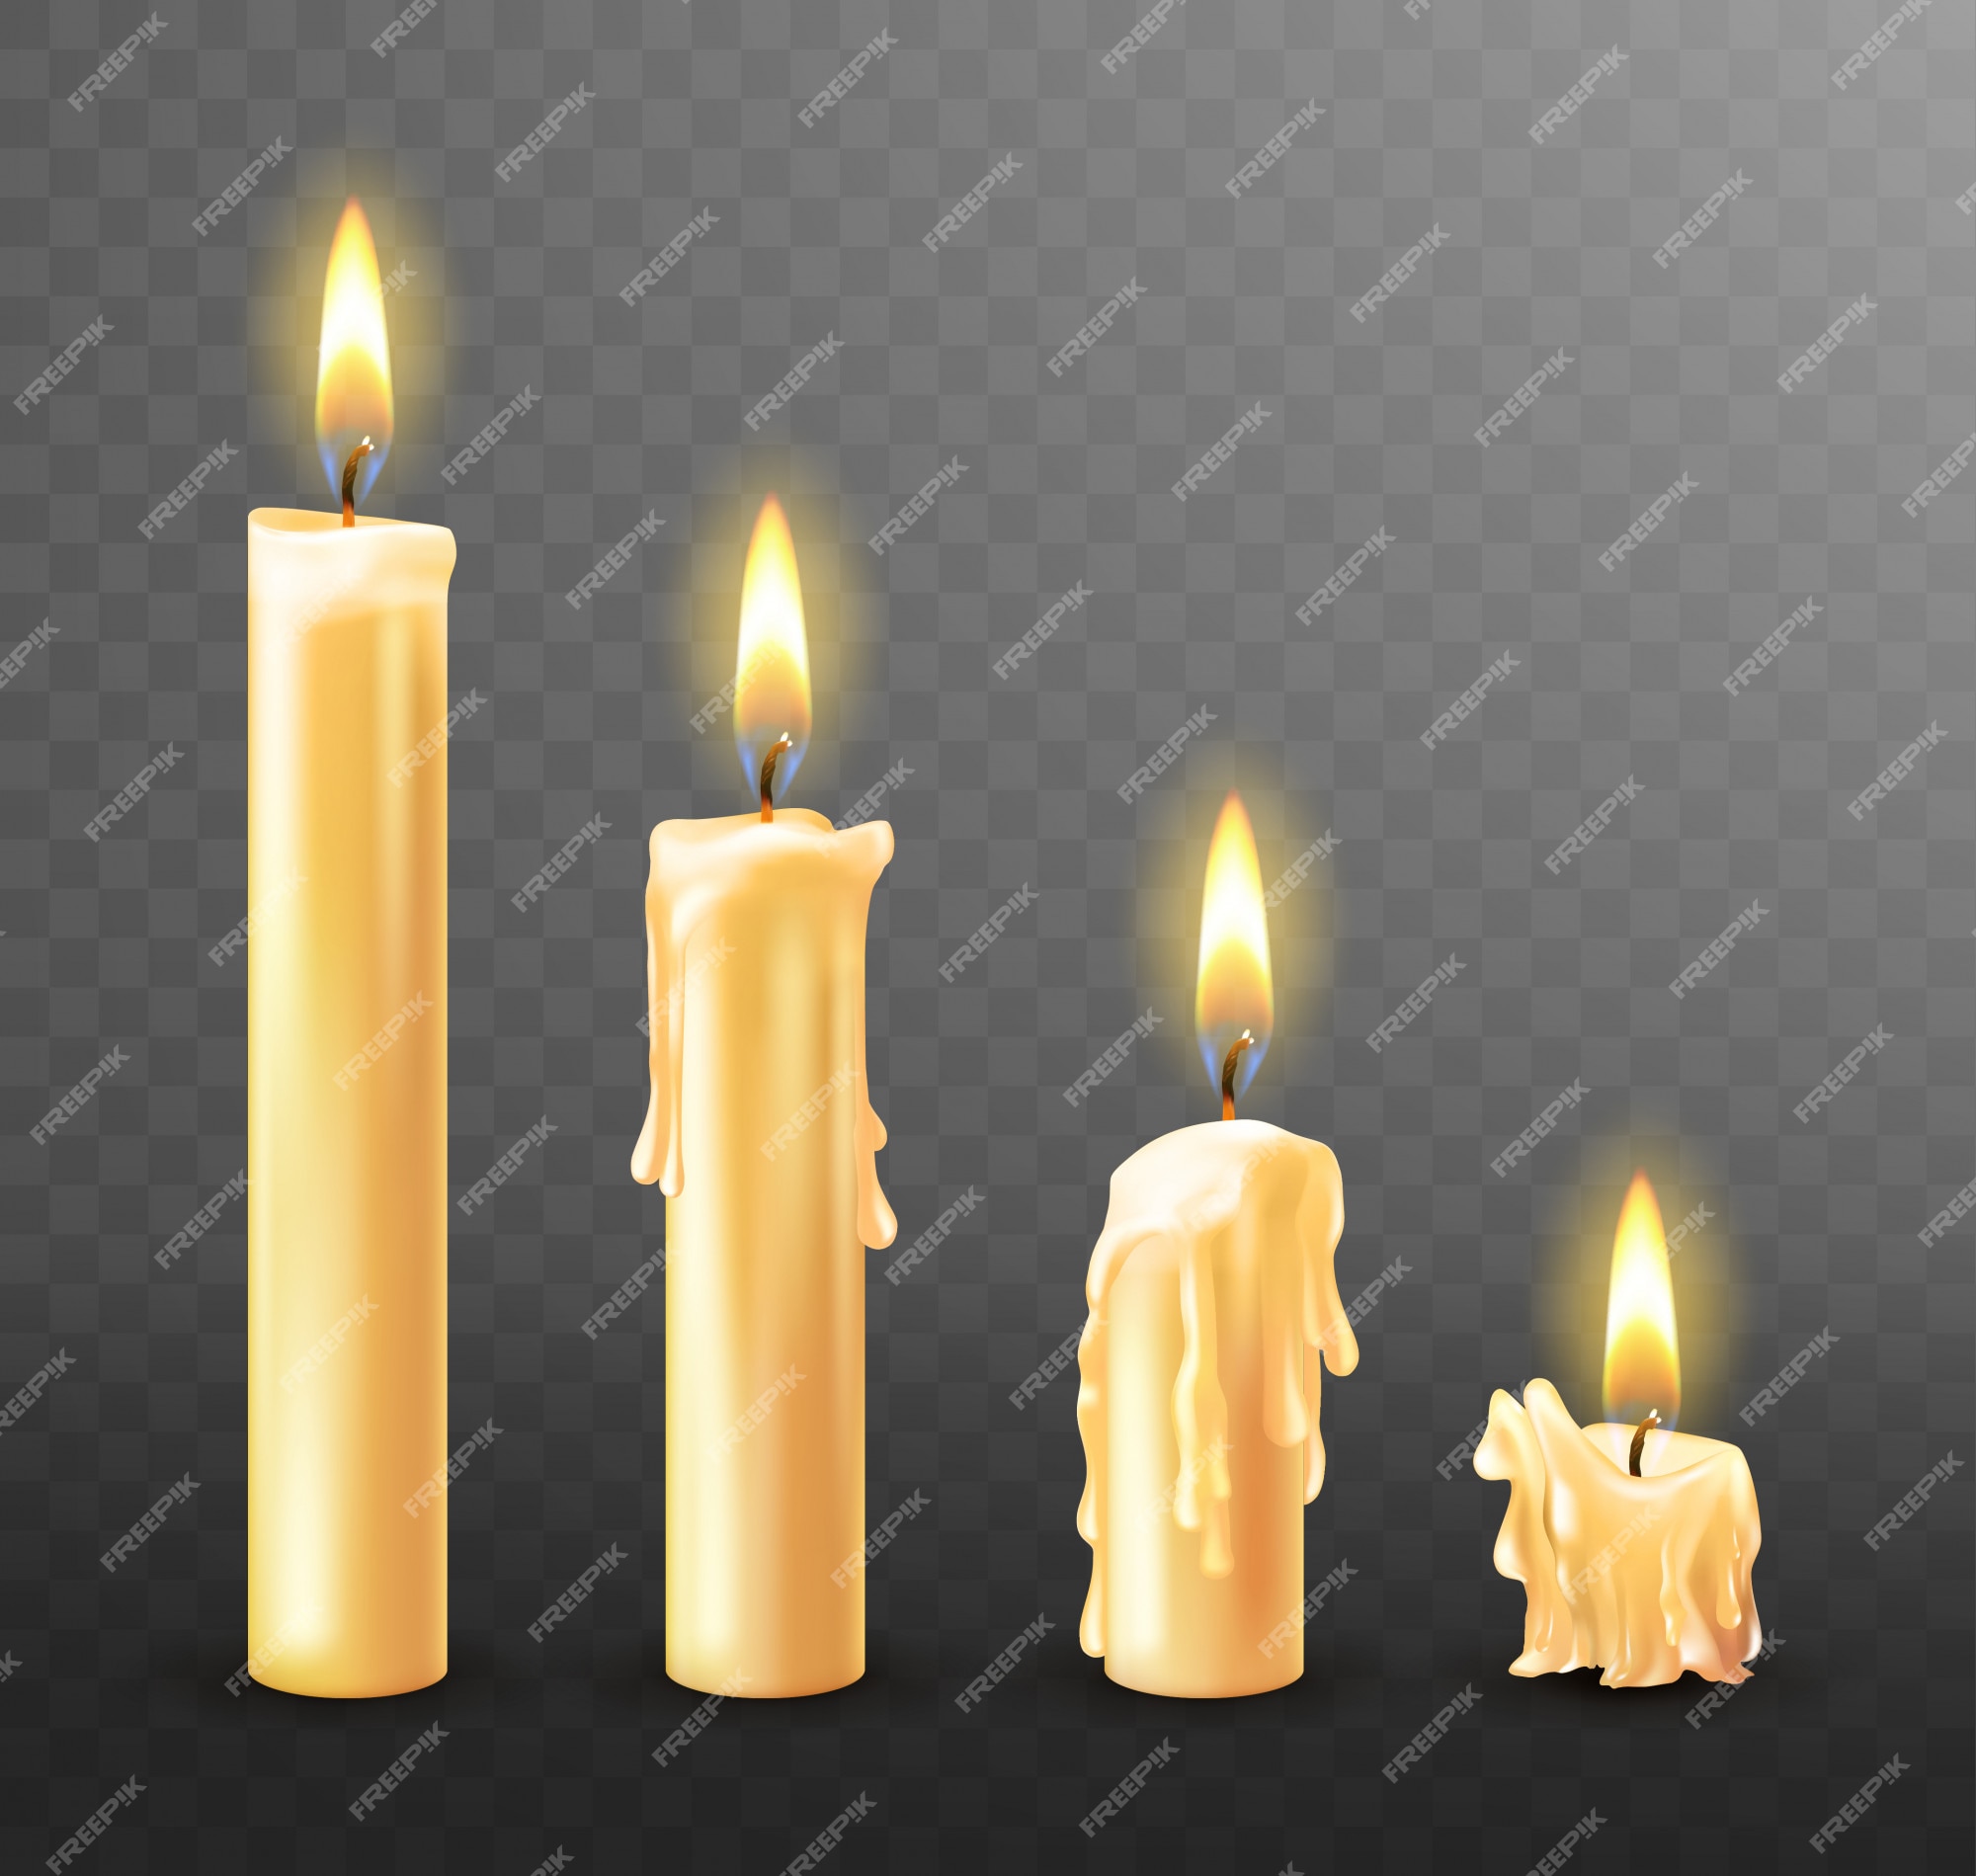 cocinar una comida Puntuación longitud Candle light Vectors & Illustrations for Free Download | Freepik